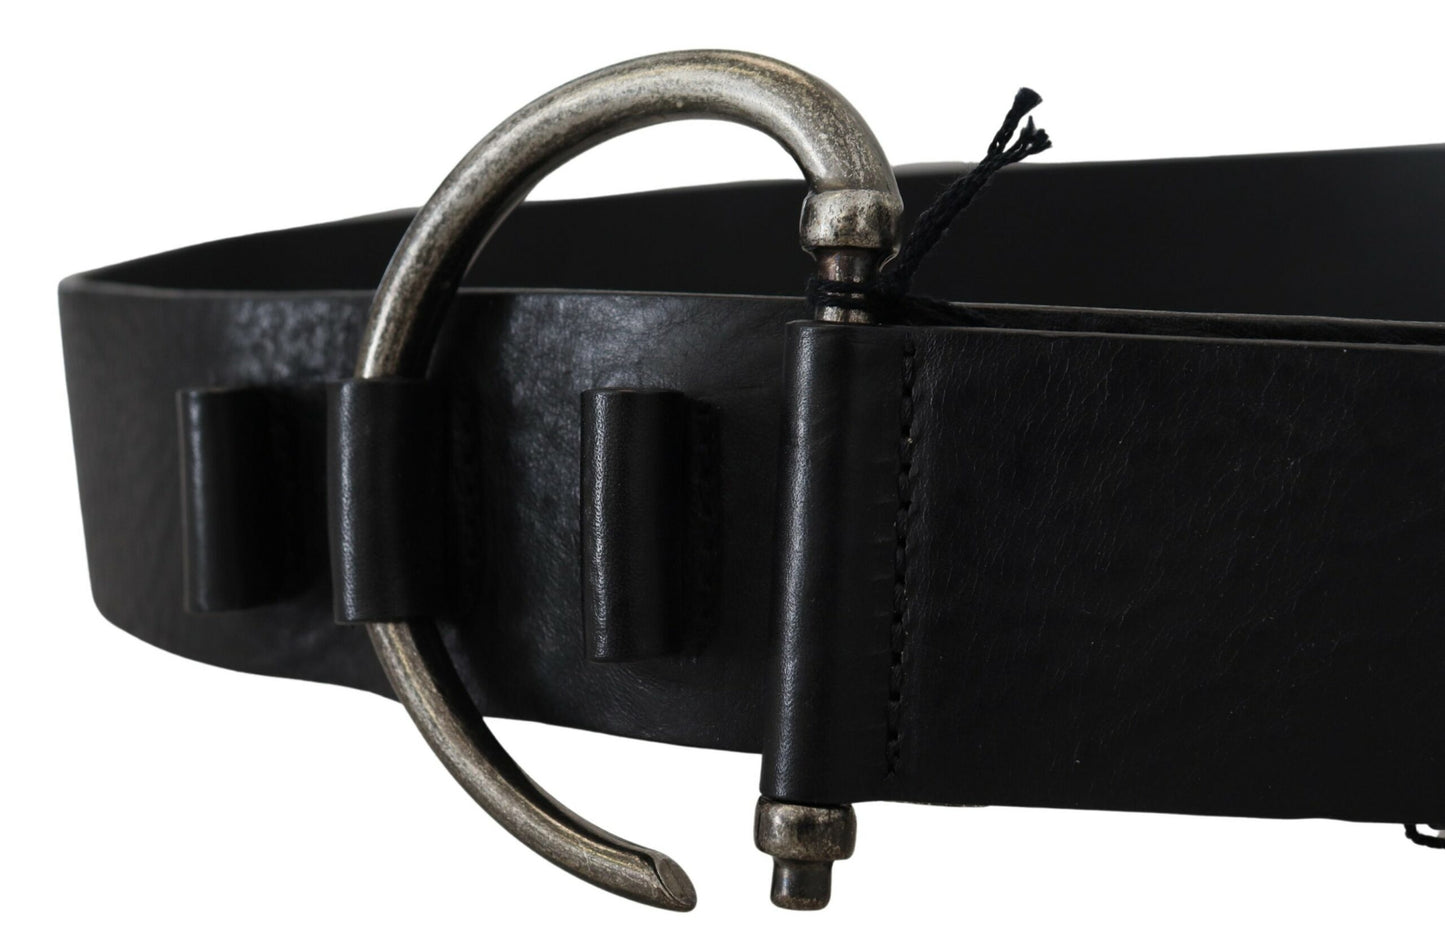 Elegant Black Leather Fashion Belt